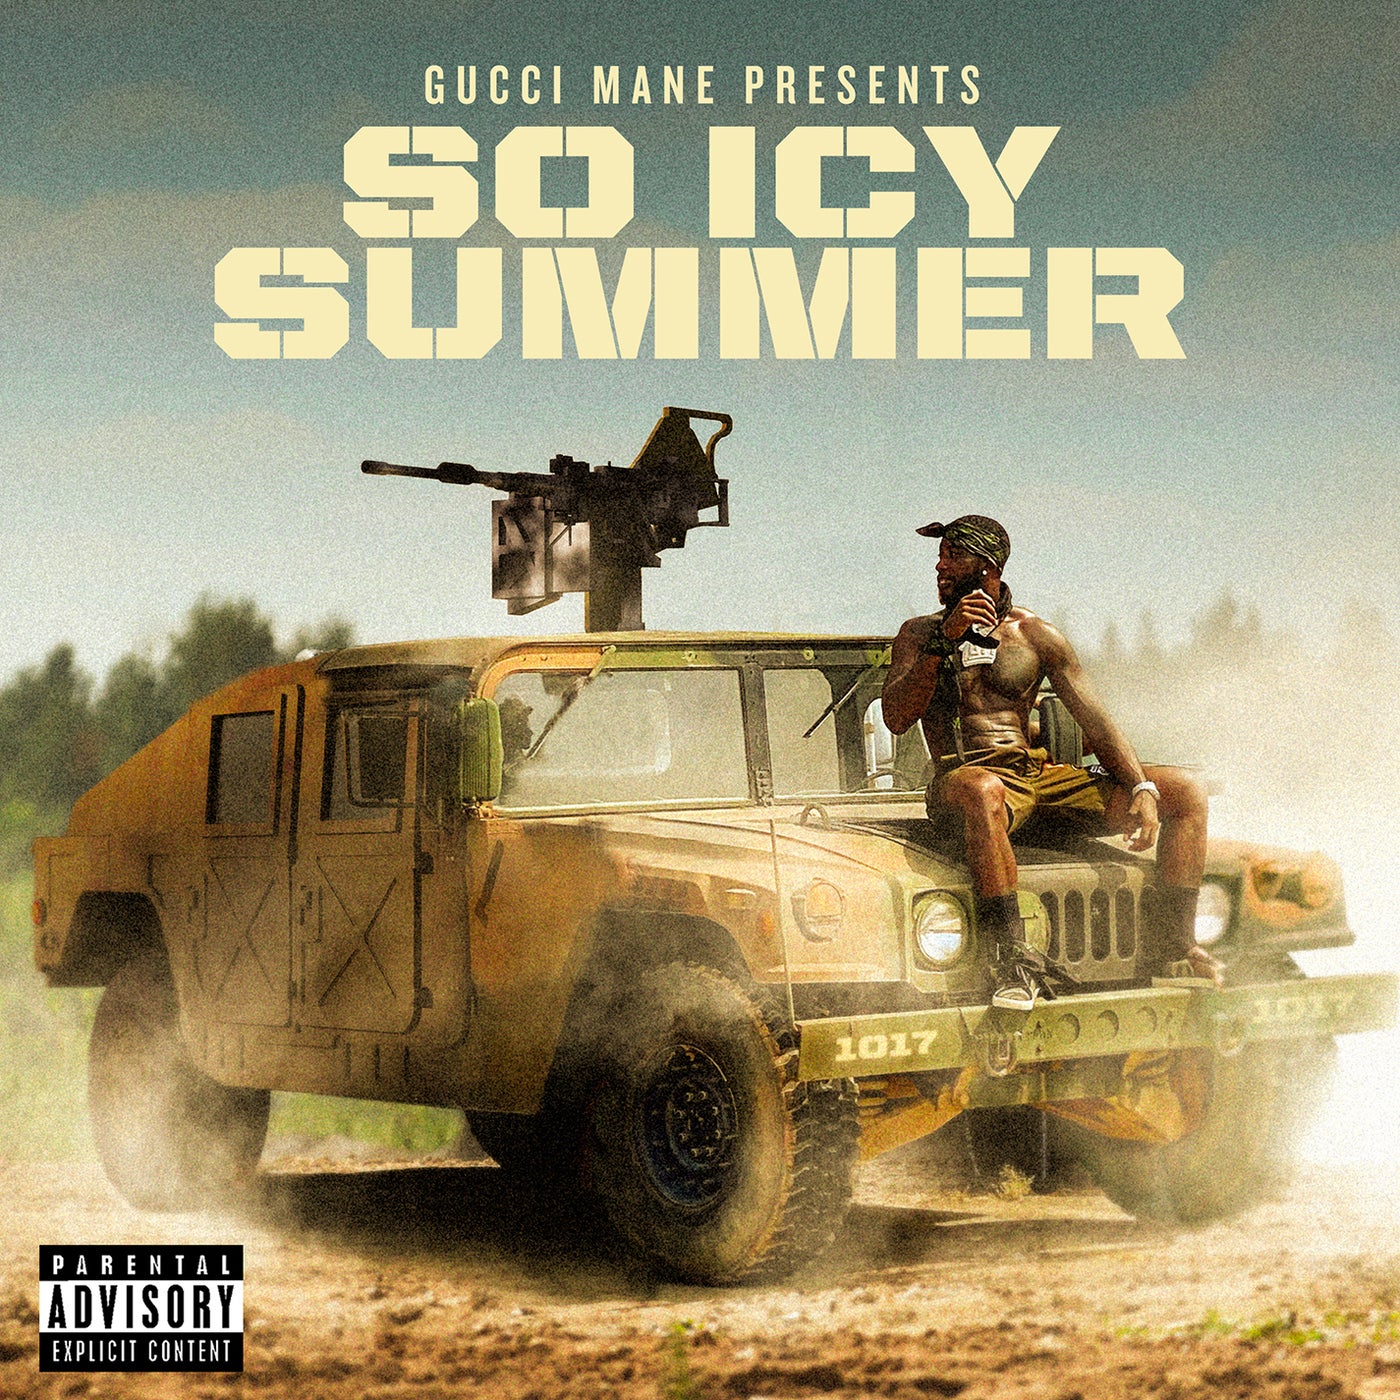 Gucci Mane Sets 'Breath of Fresh Air' Album Release Date